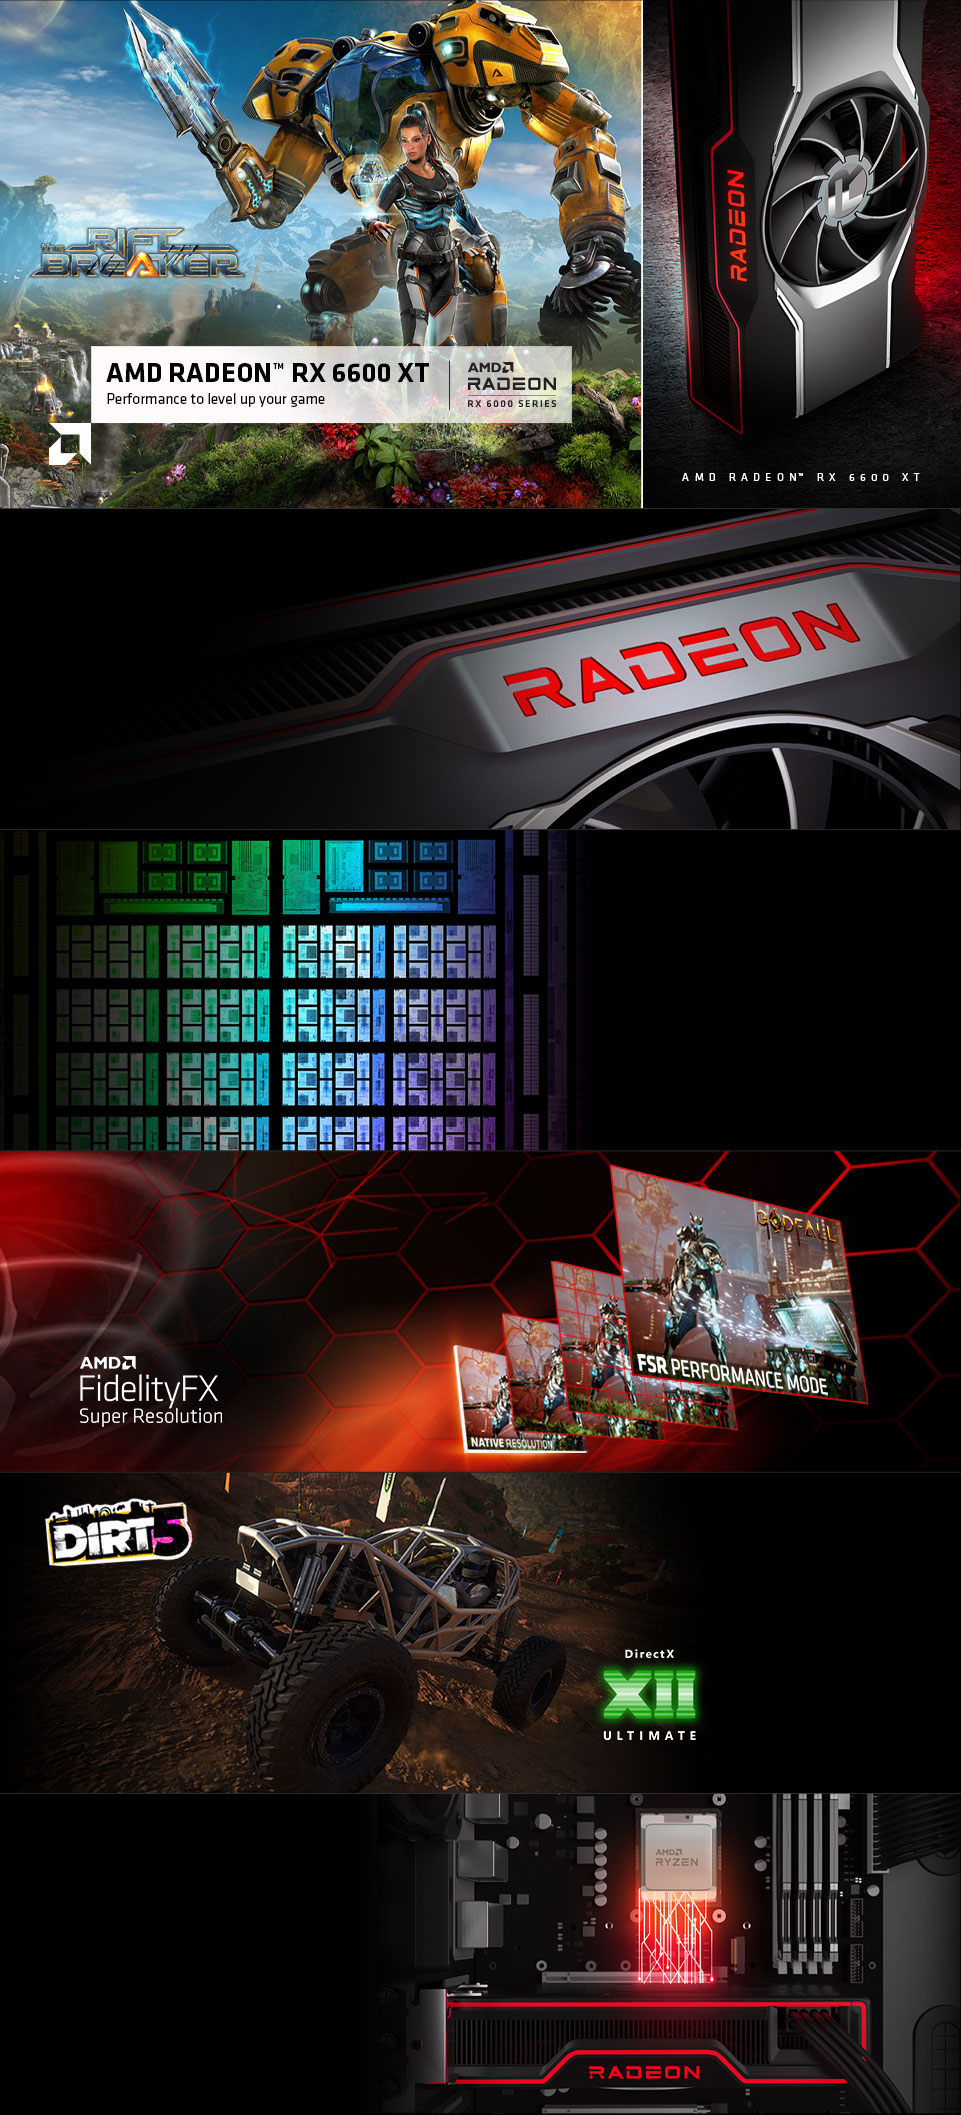 Radeon 6600 XT